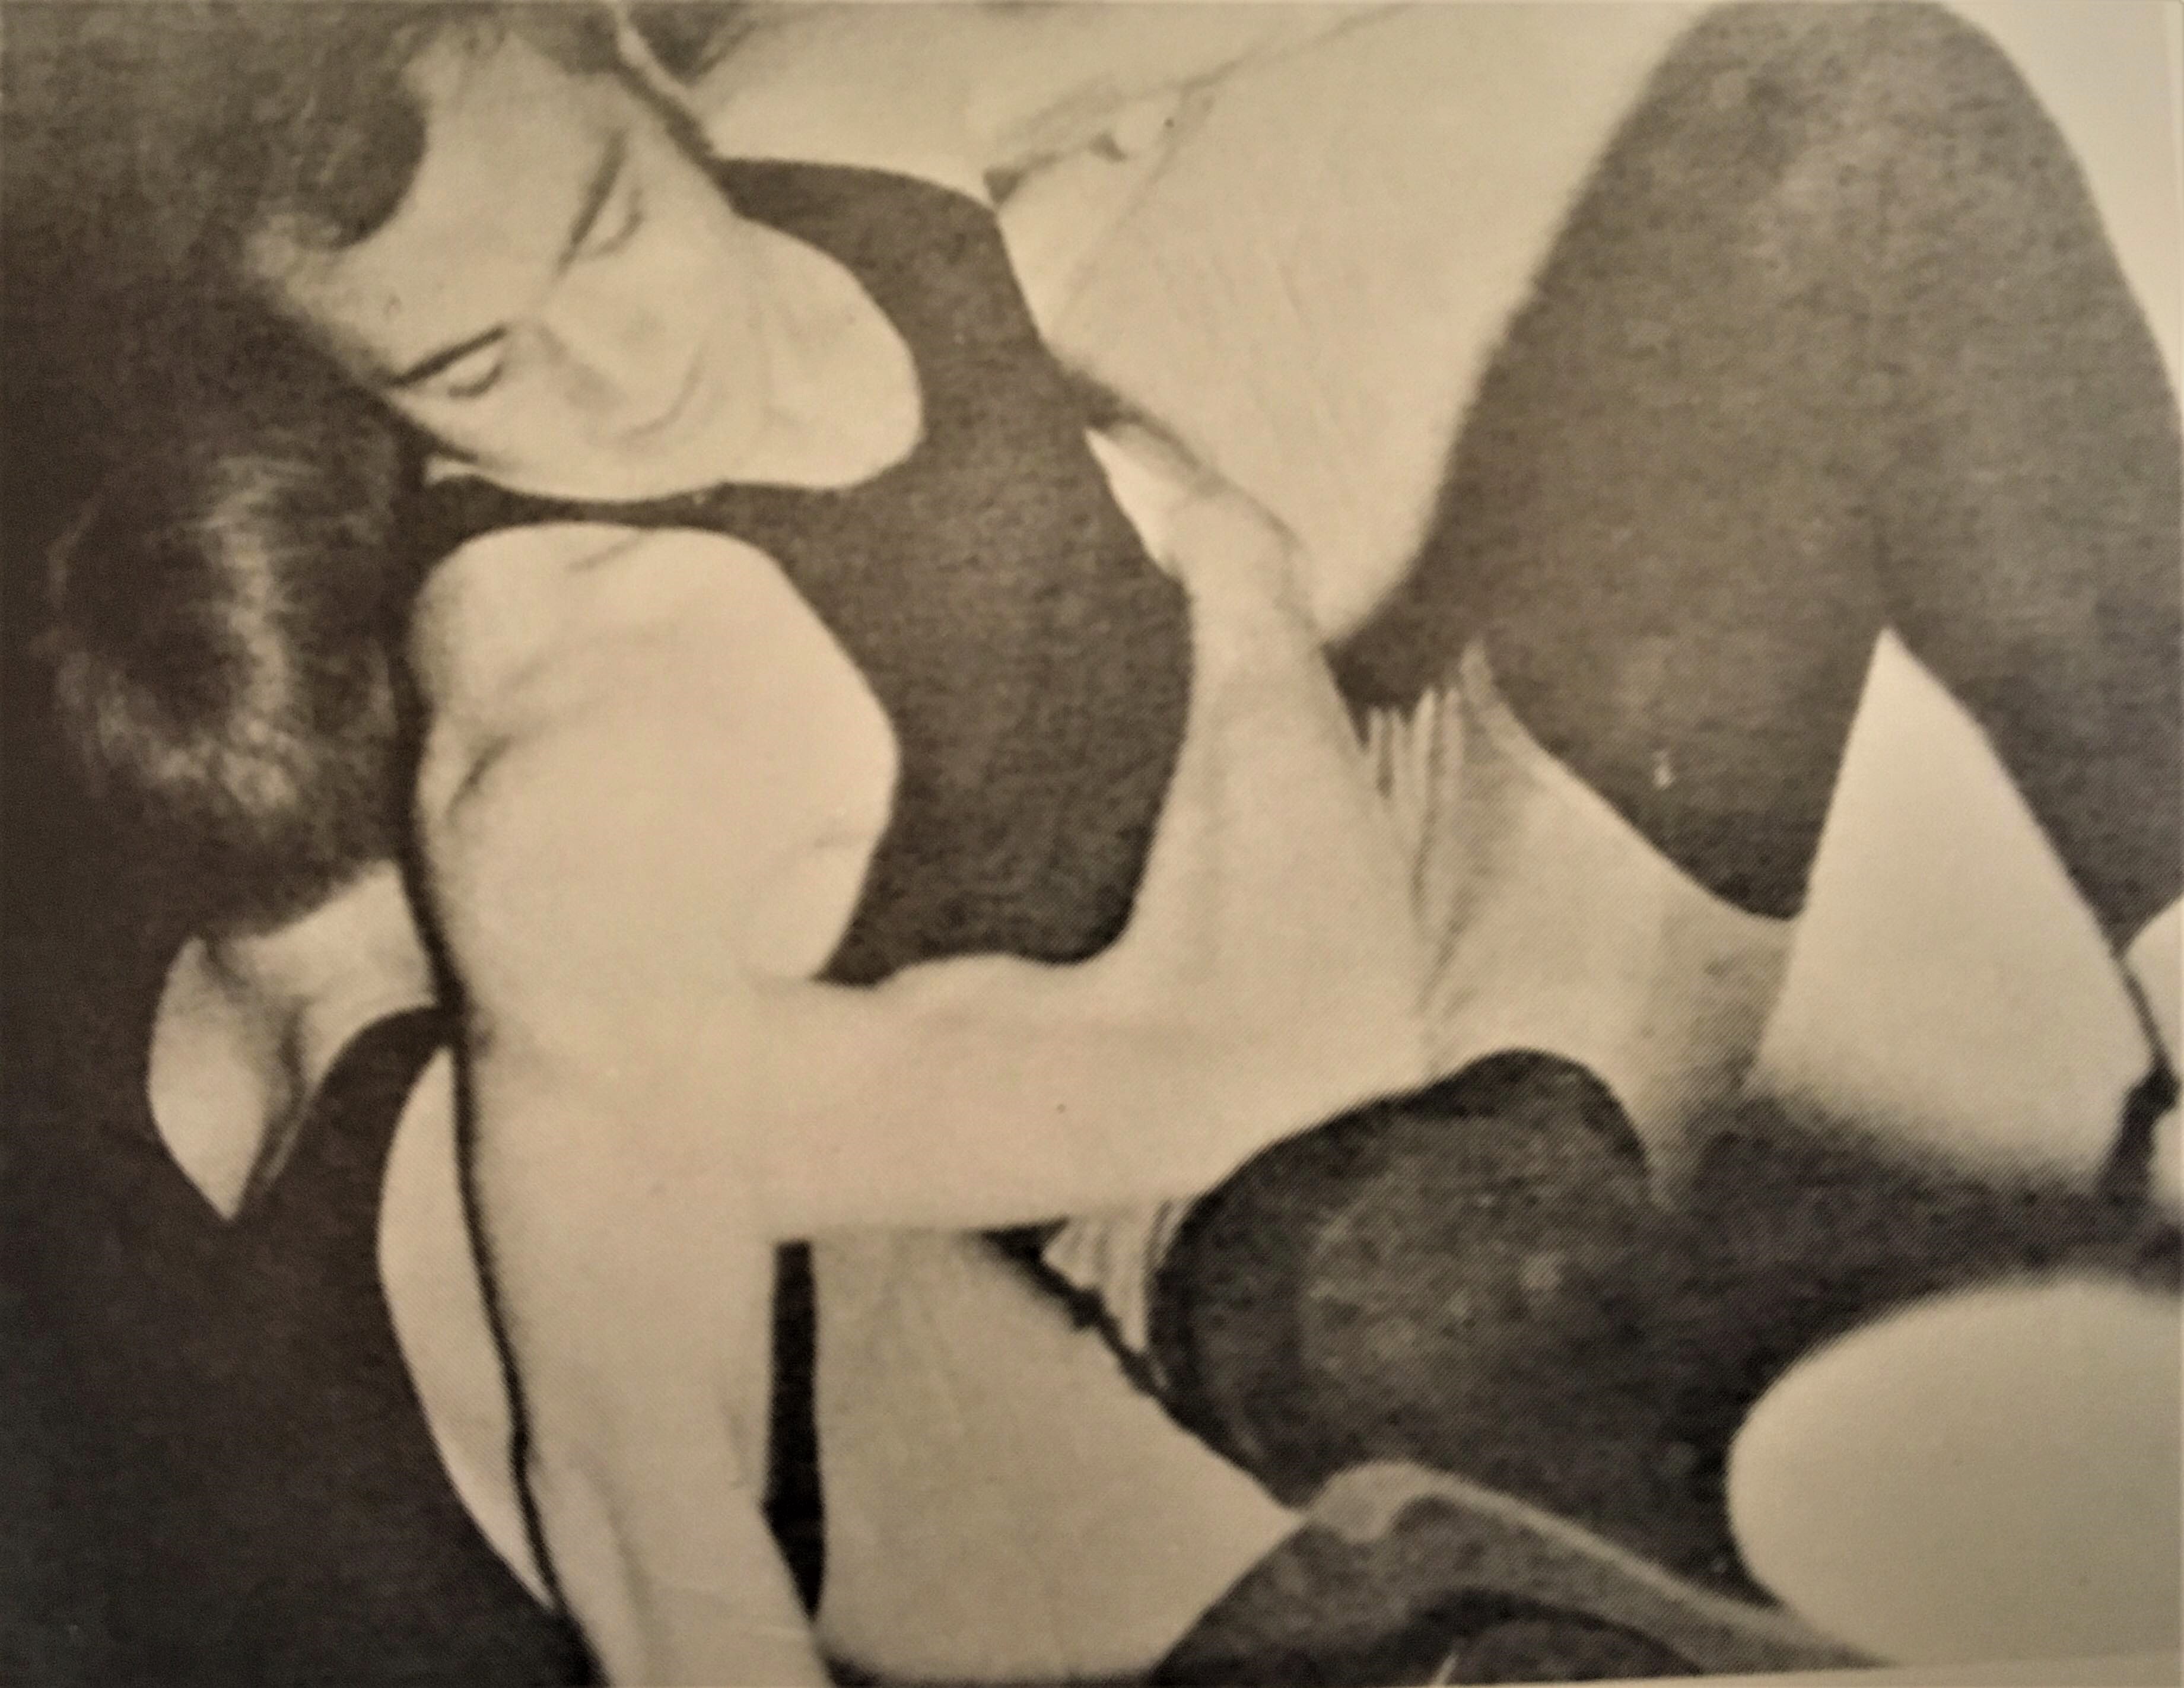 Bob Shanklin fighting through a tight waist